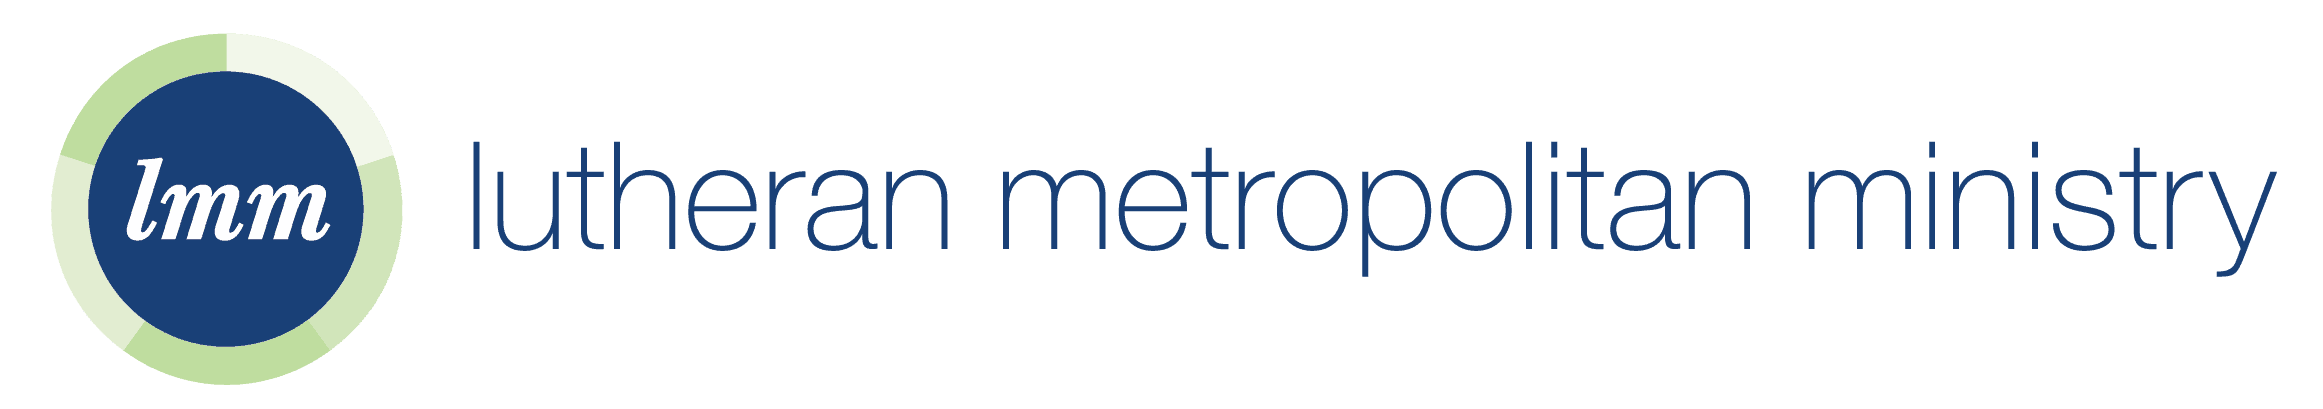 lutheran metropolitan ministry logo